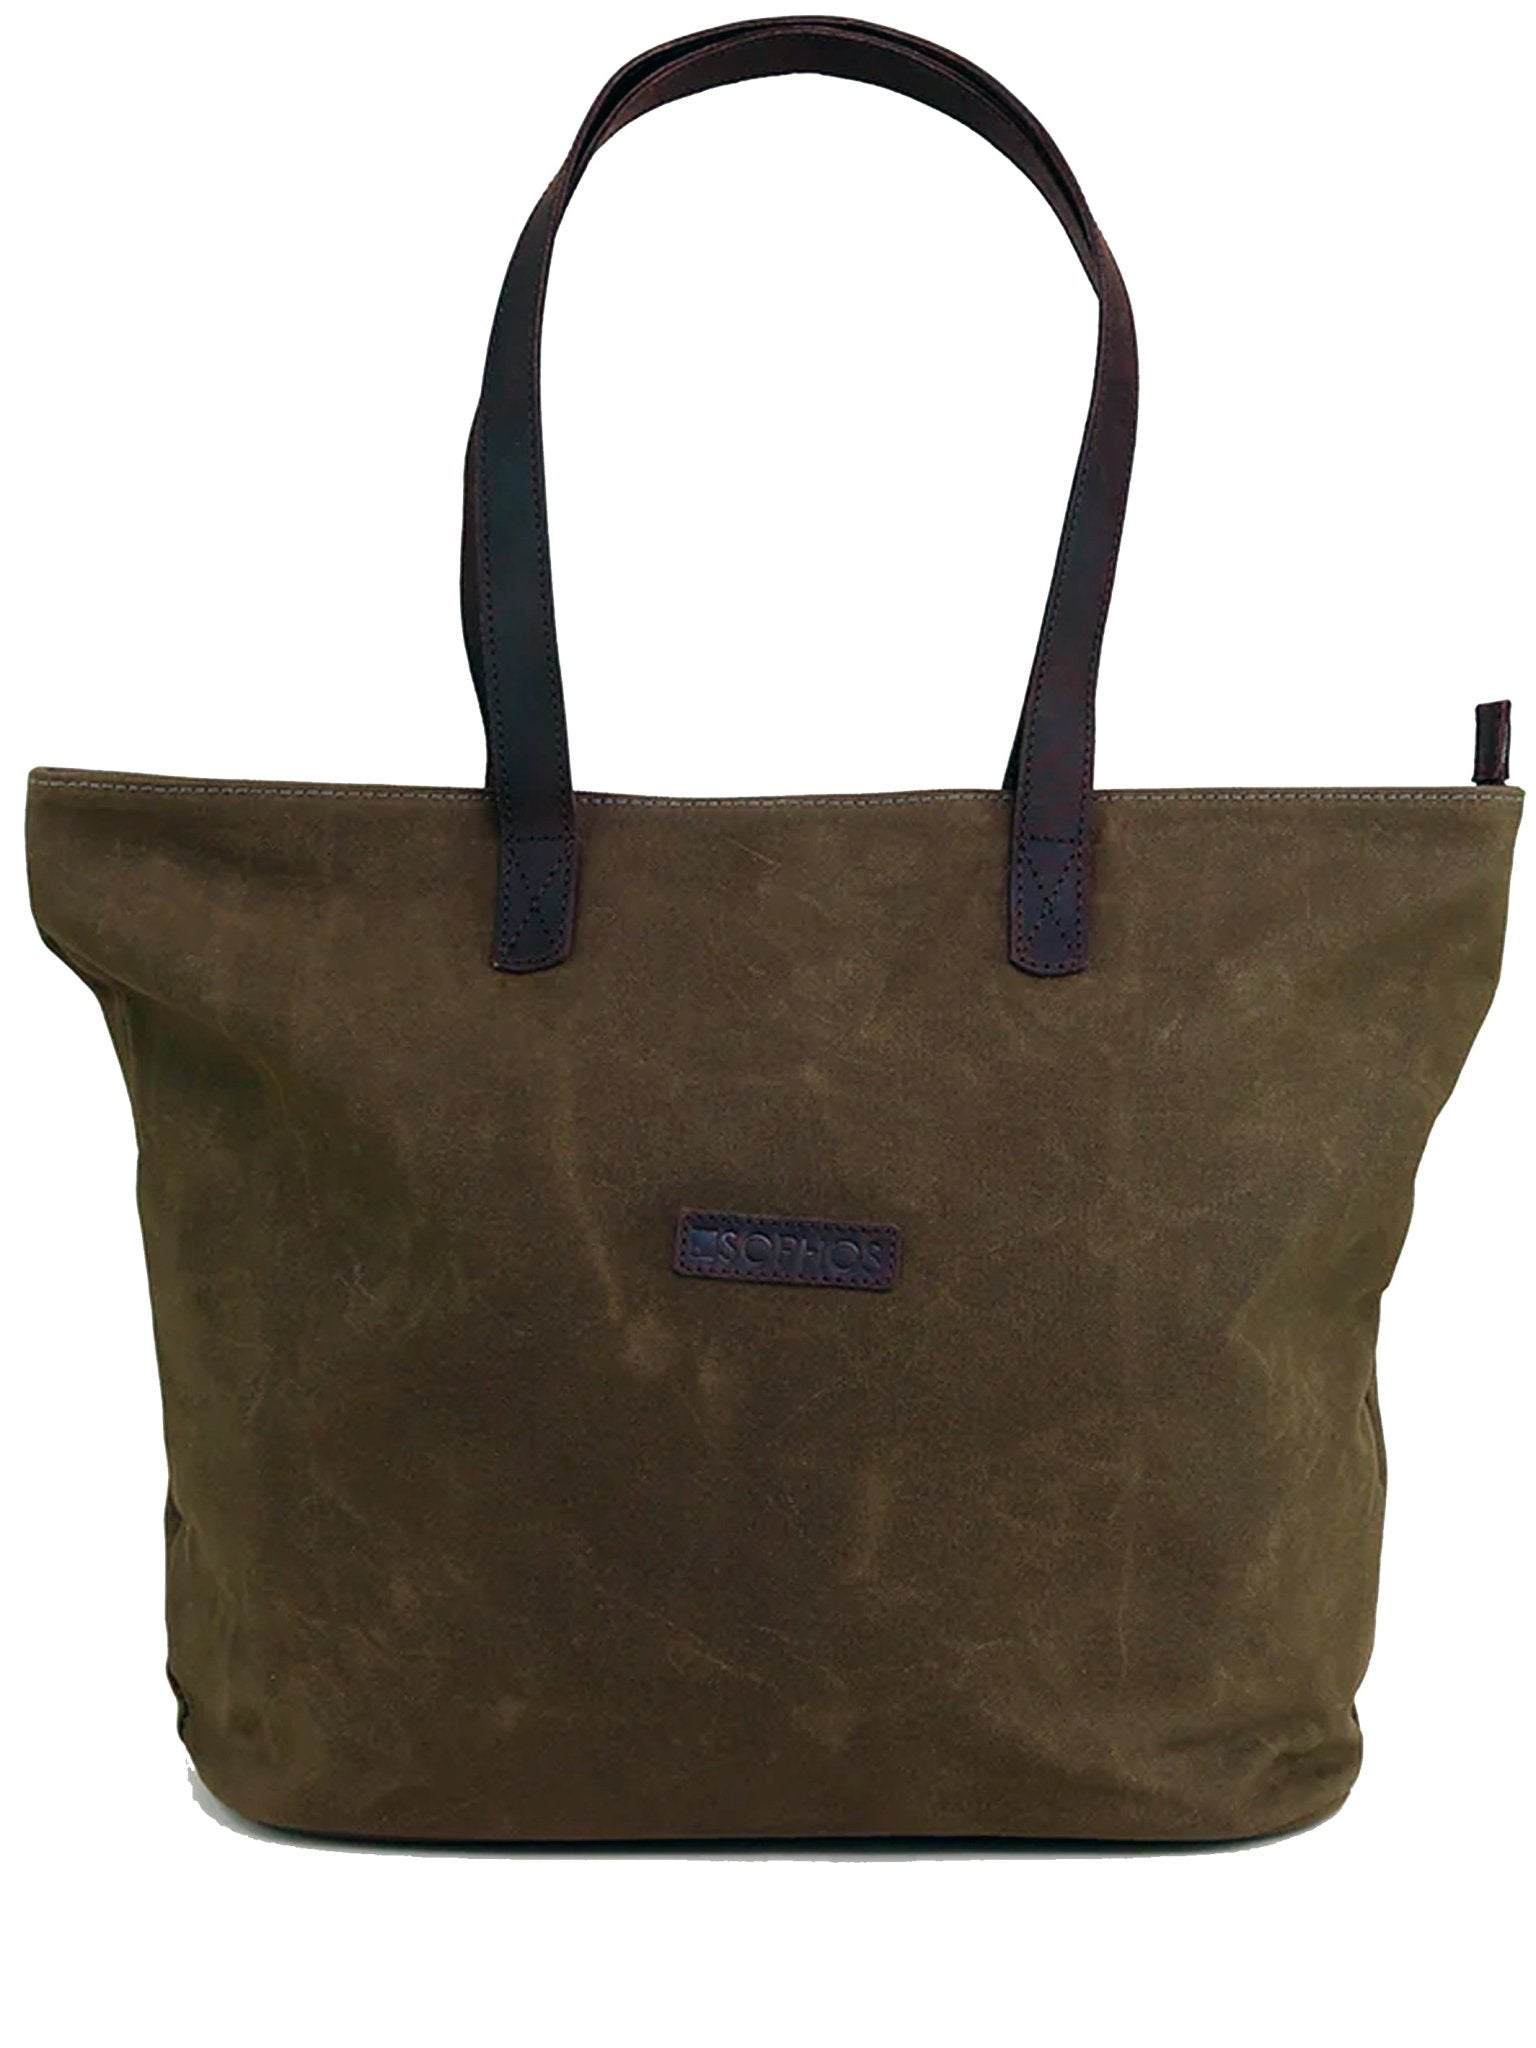 4elementsclothingThe British Bag CompanyBritish Bag Company - Waxed Canvas Tote Bag - Premium weight leather trim tote bagBag795108